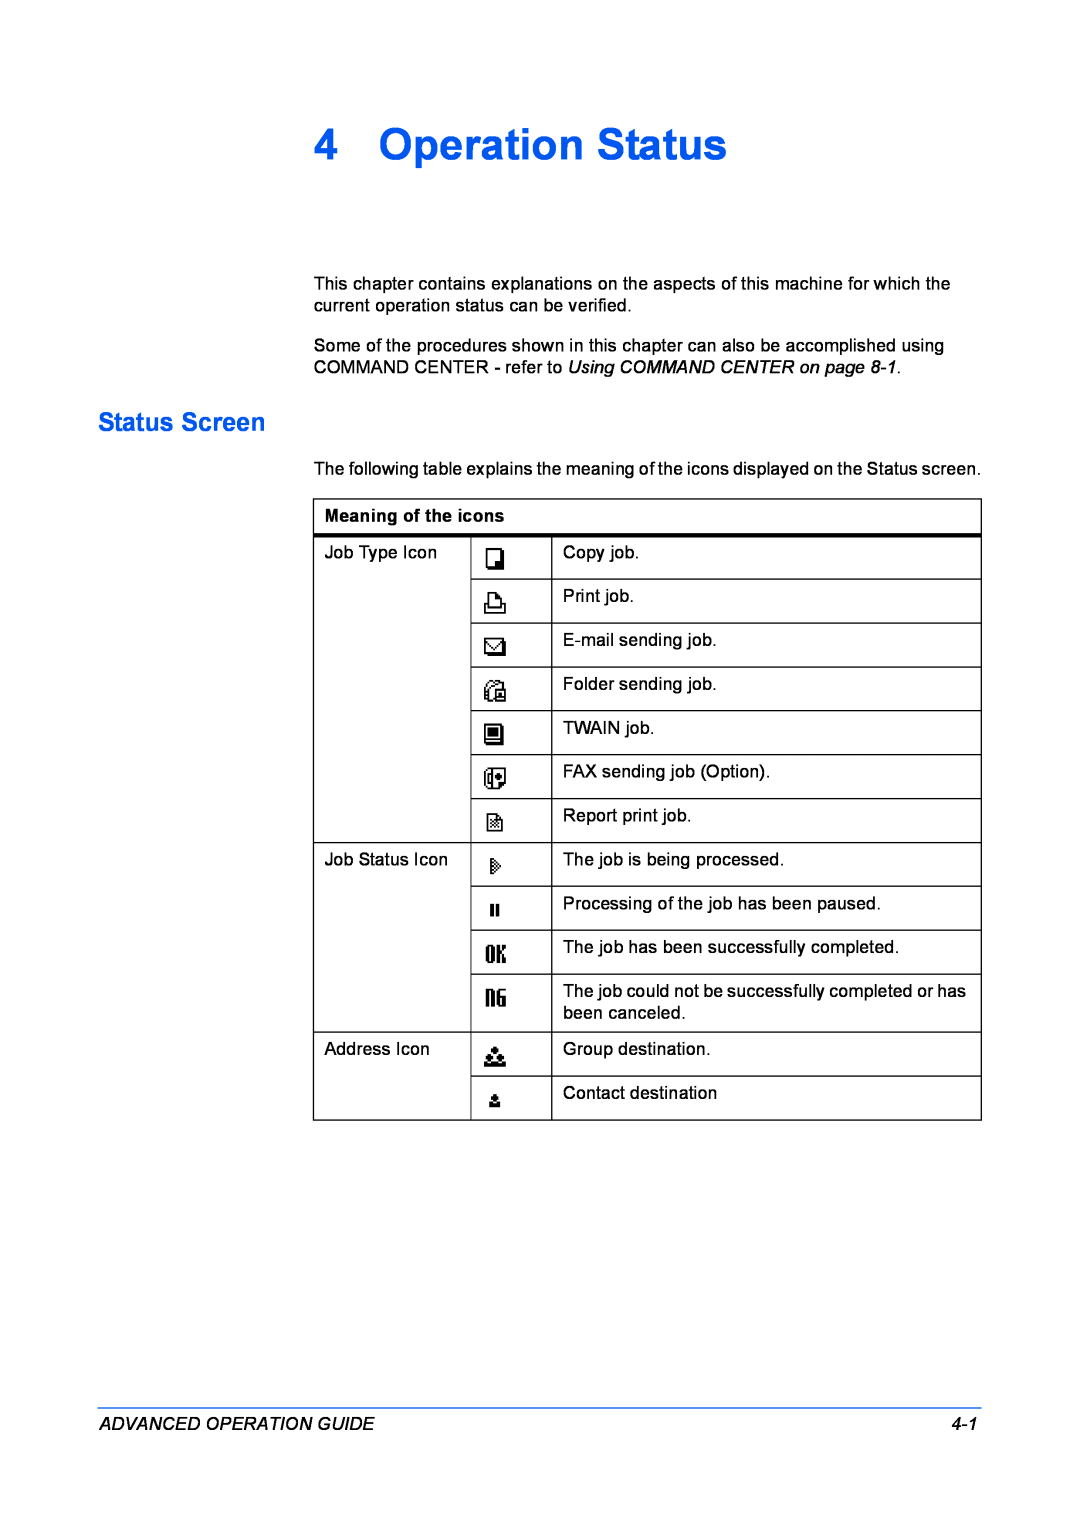 Kyocera KM-1820 manual Operation Status, Status Screen 